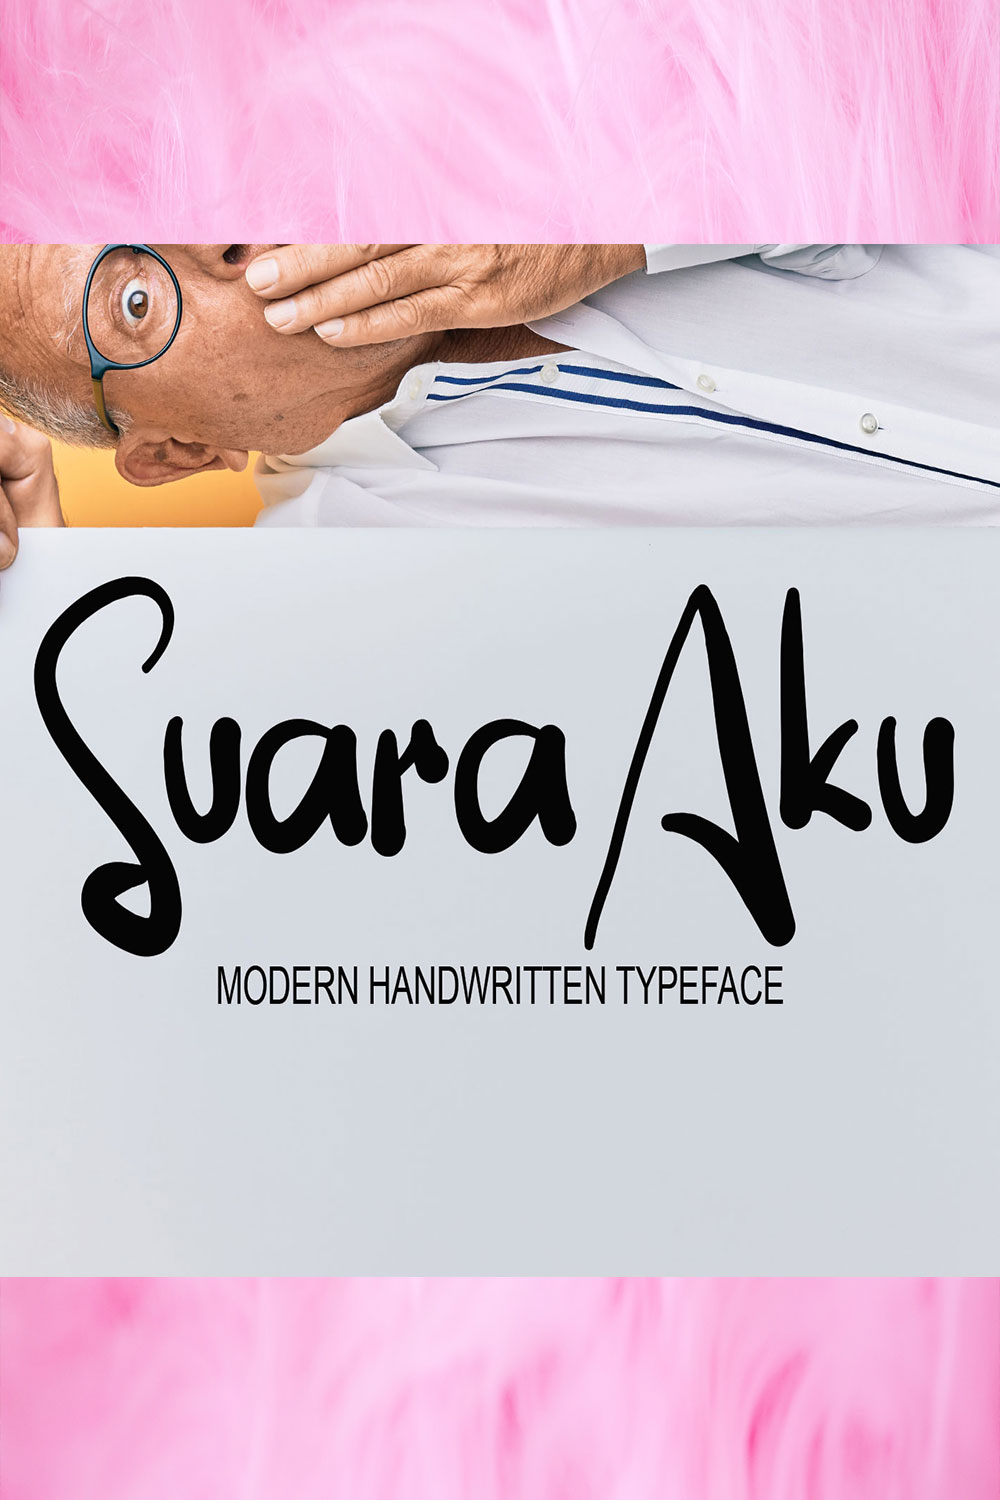 Font Script Signature Suara Aku Design pinterest image.